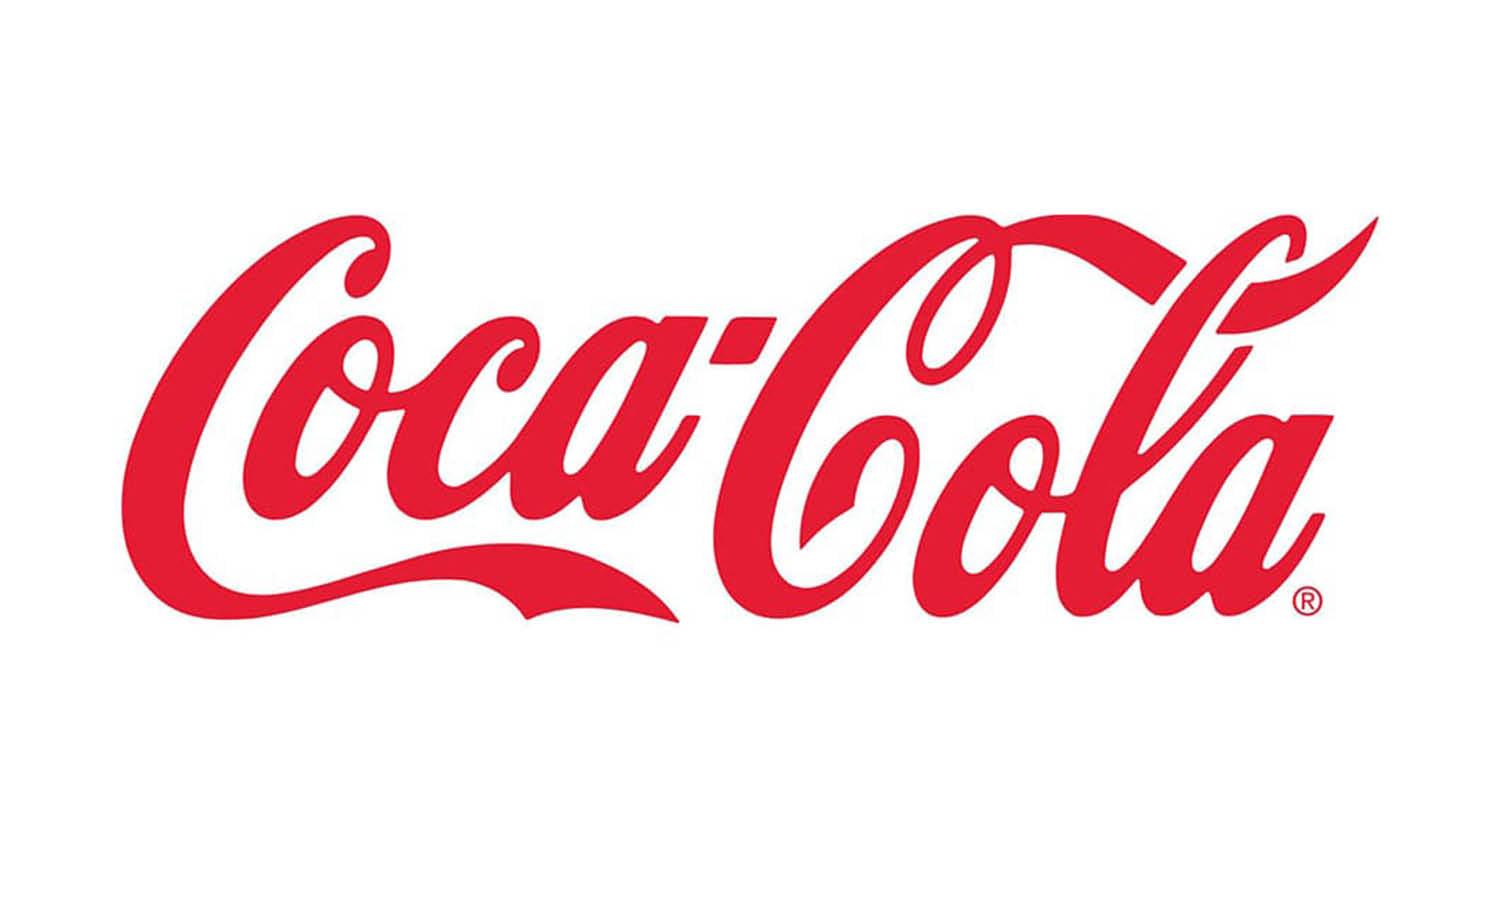 Coca-Cola Logo Design: History & Evolution - Kreafolk